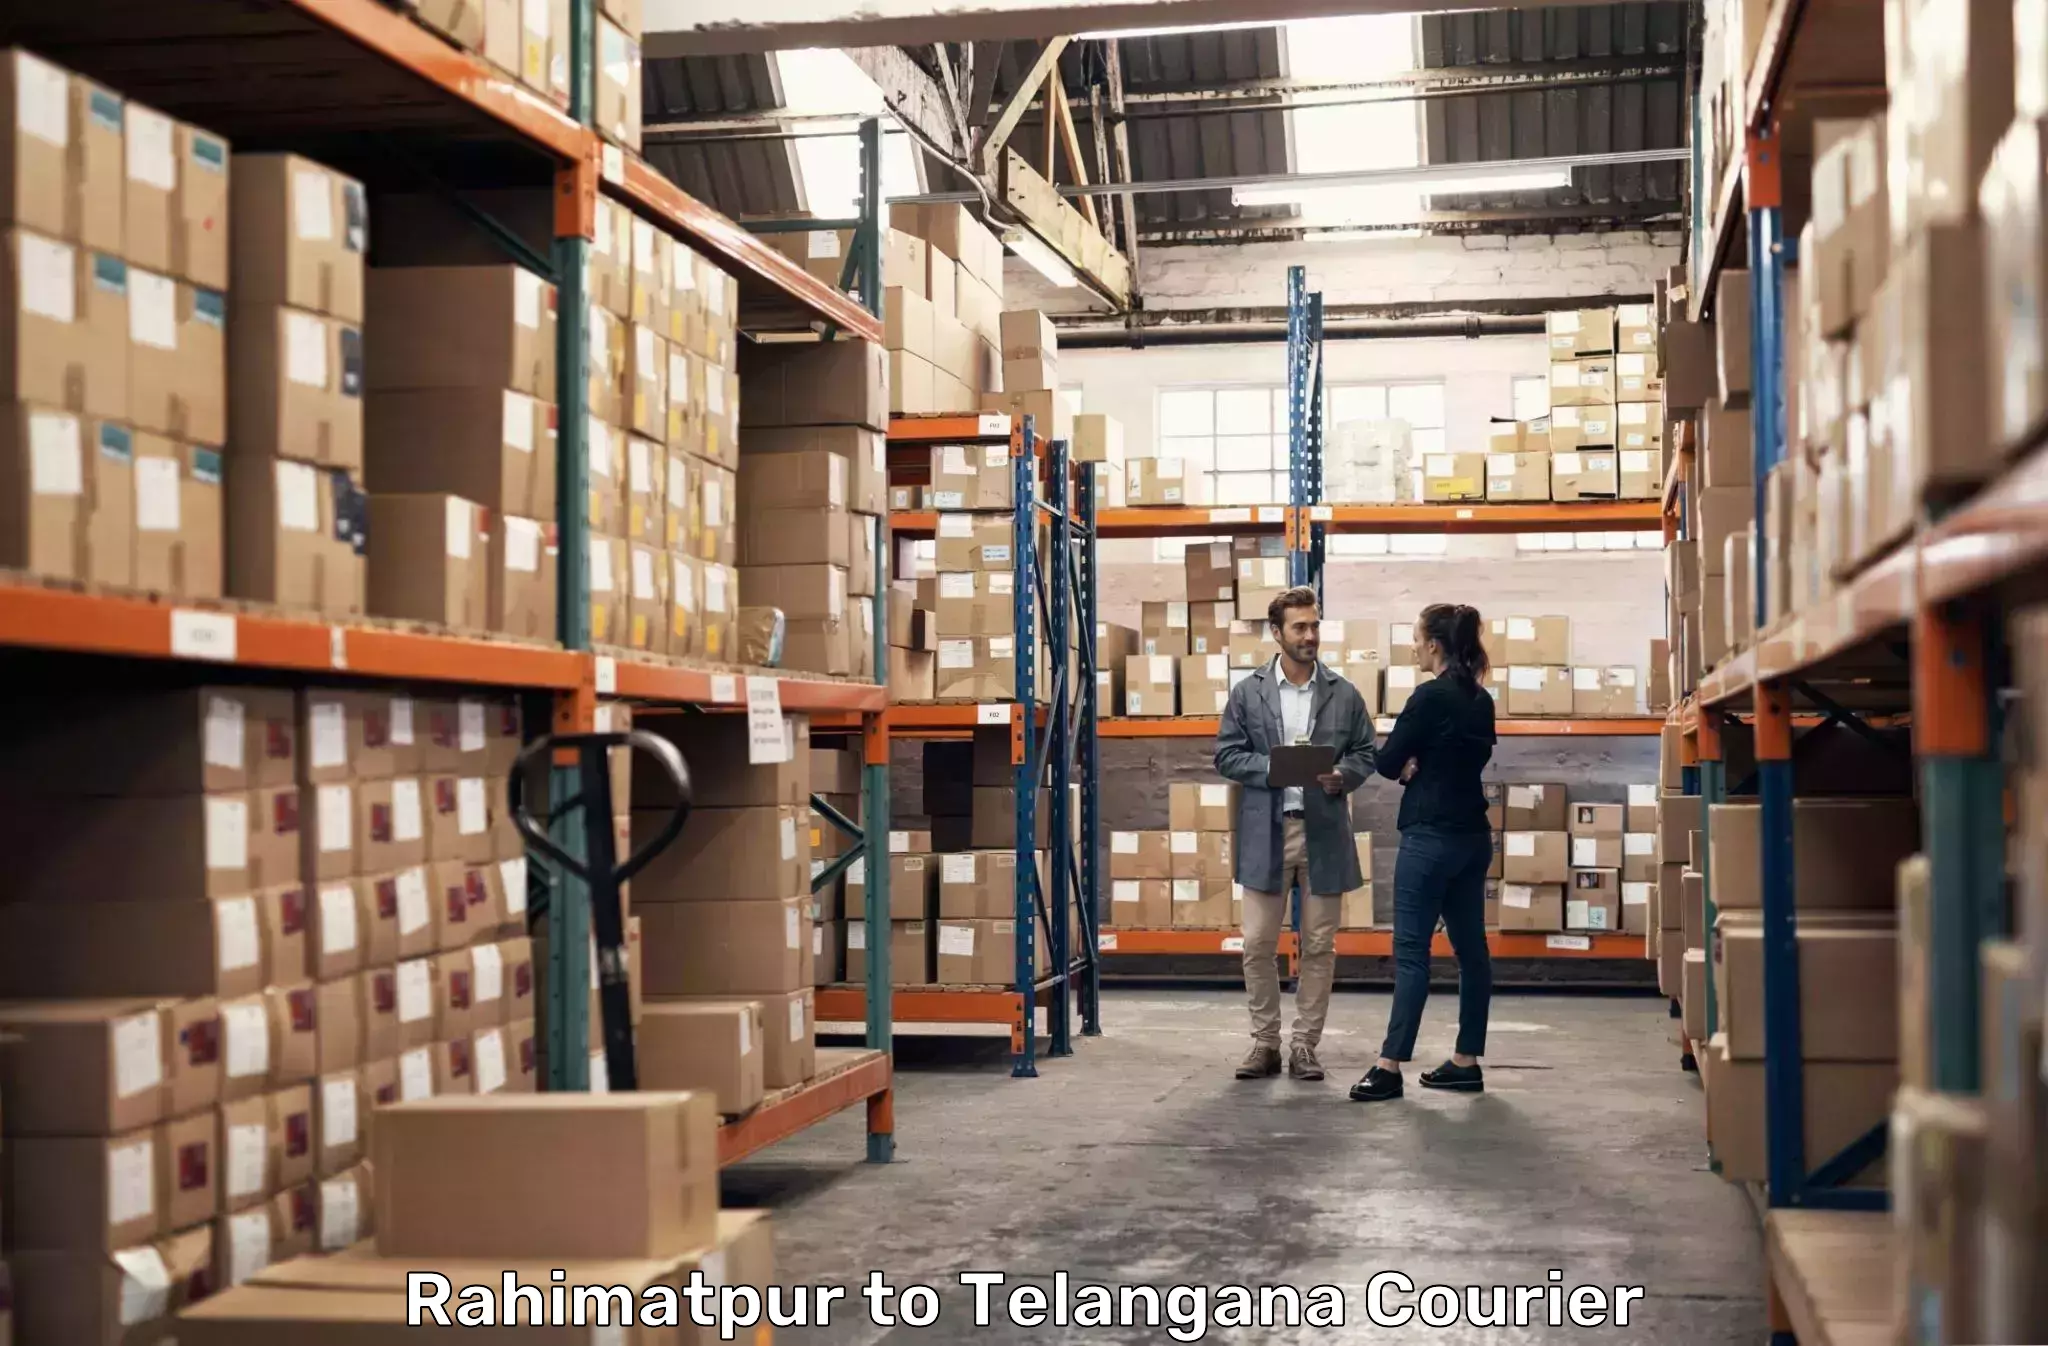 International courier networks Rahimatpur to Manthani